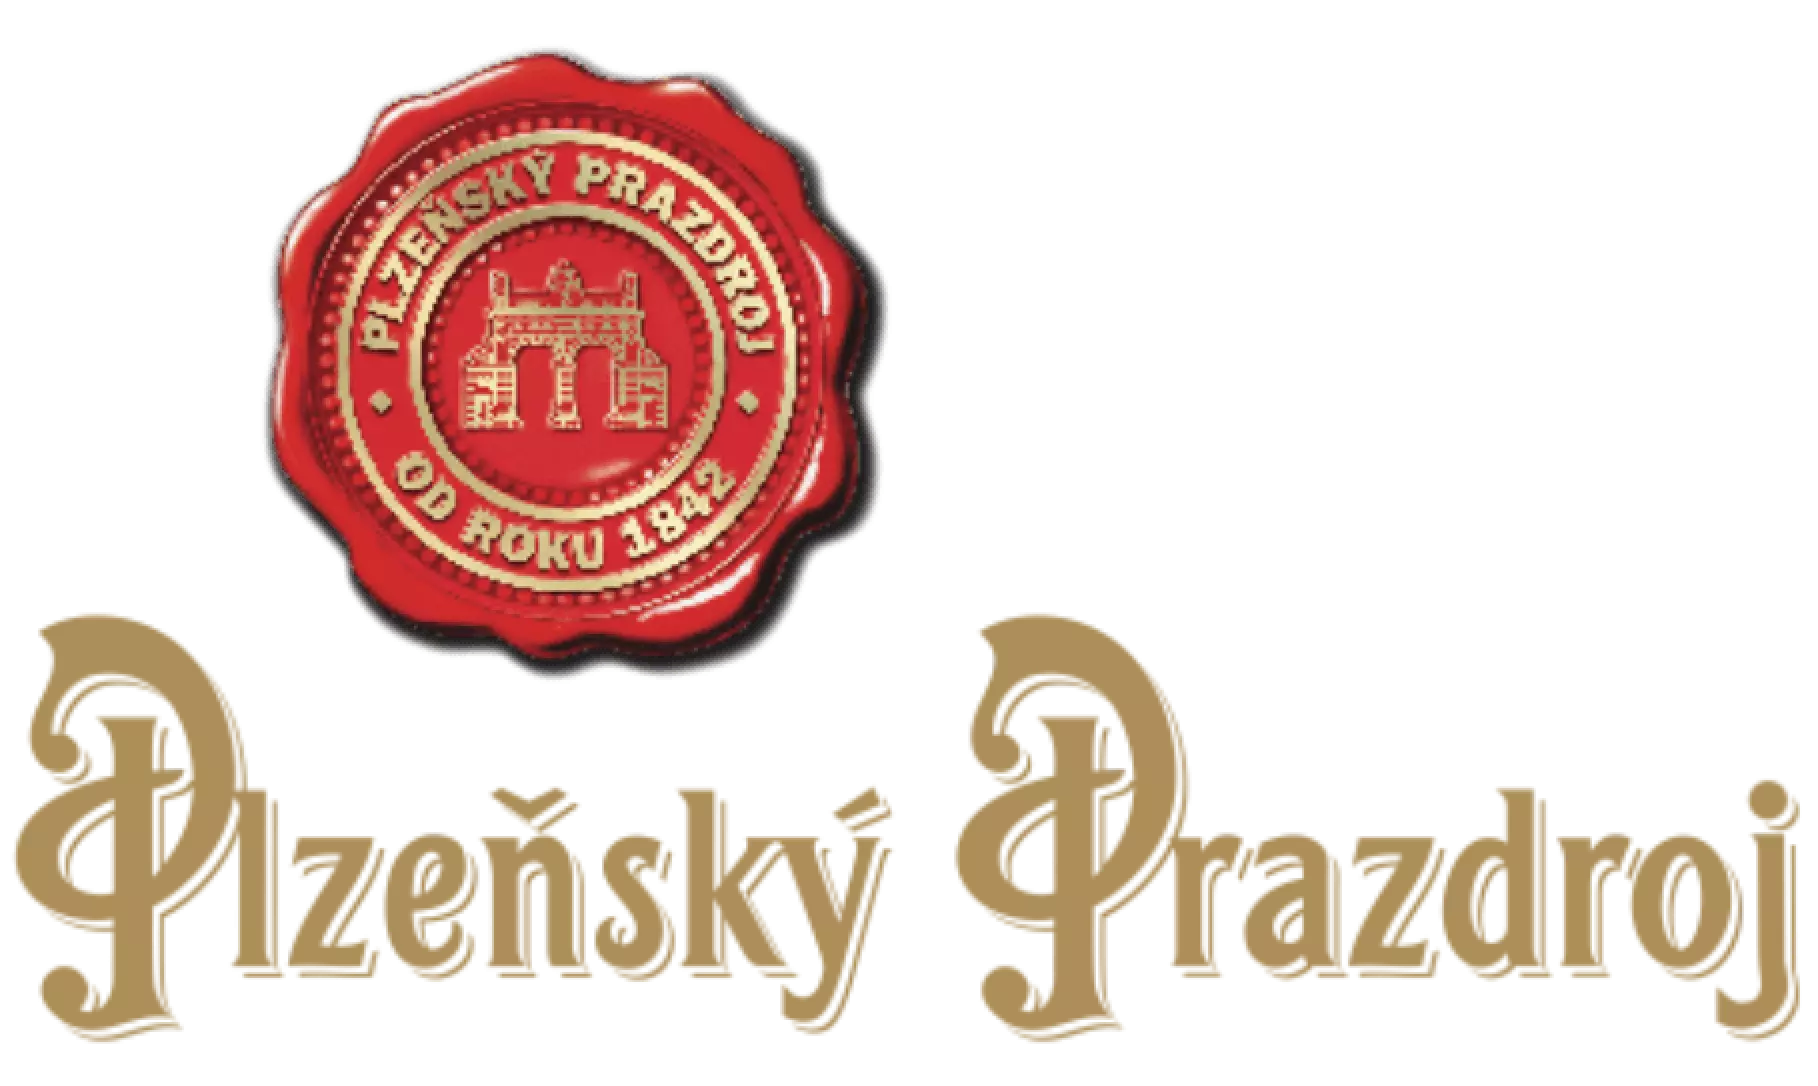 plzensky-prazdroj-orez.png